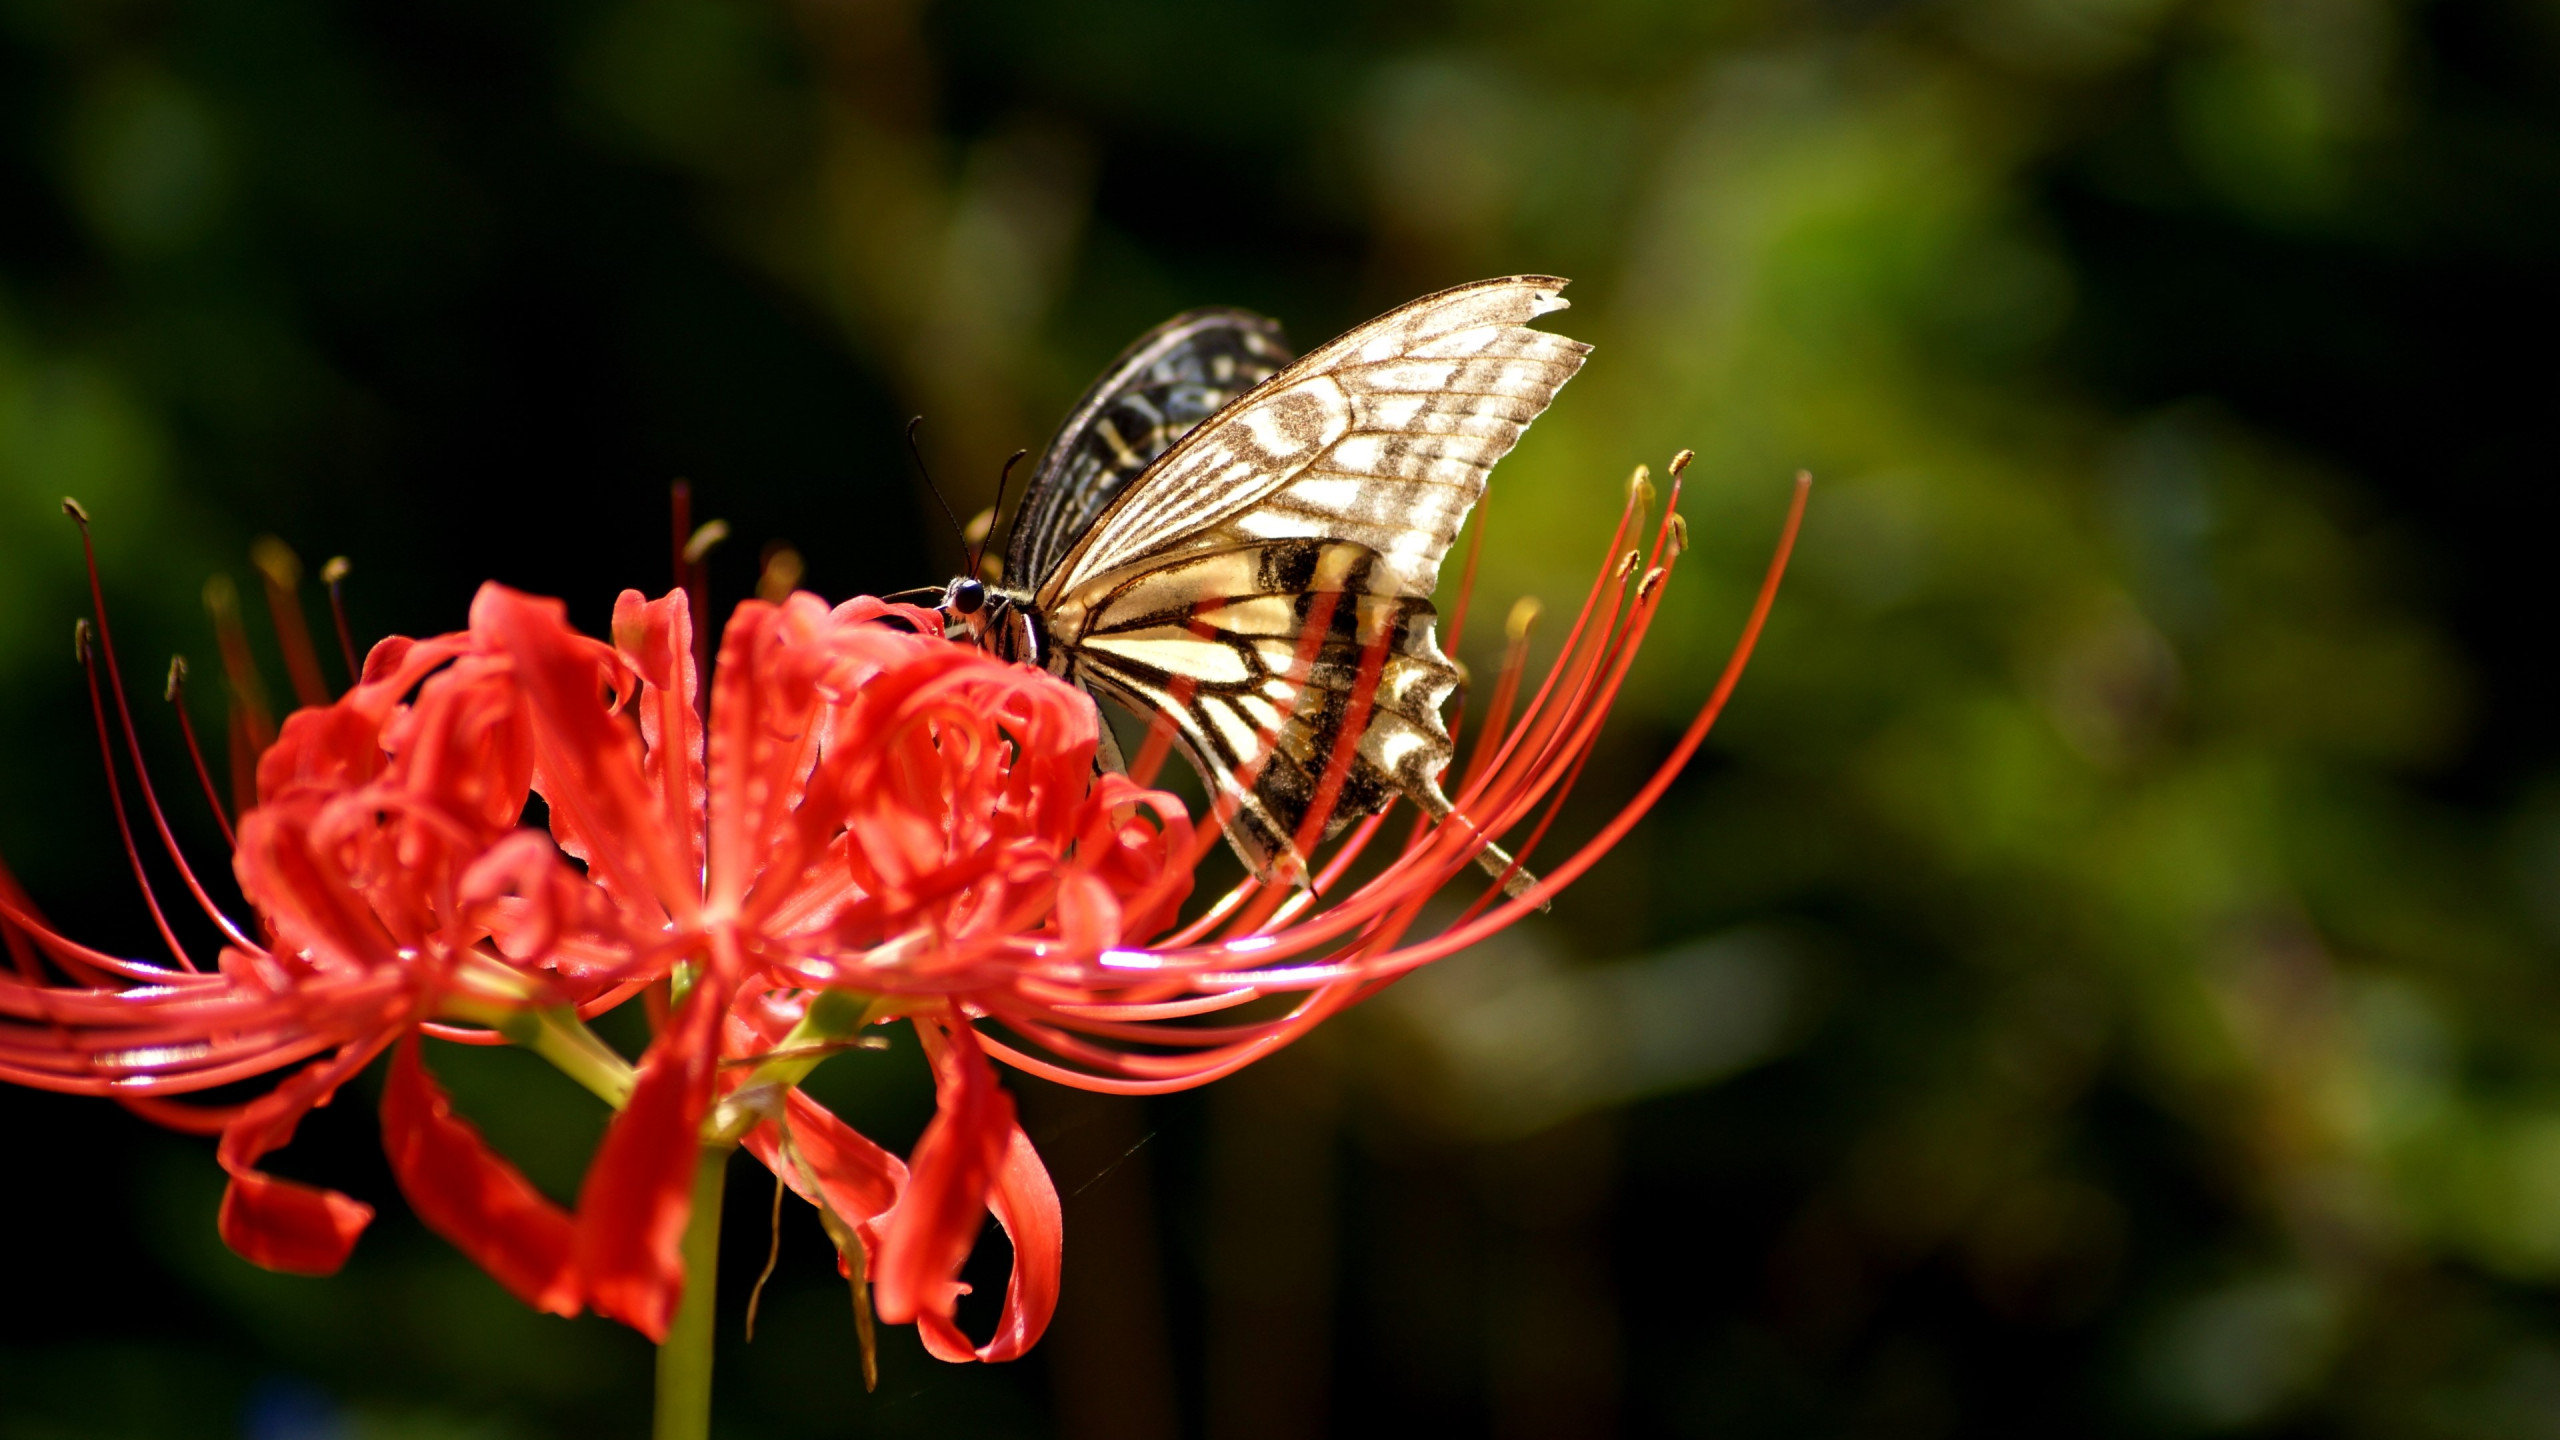 Butterfly on Lycoris Radiata flower wallpaper 2560x1440